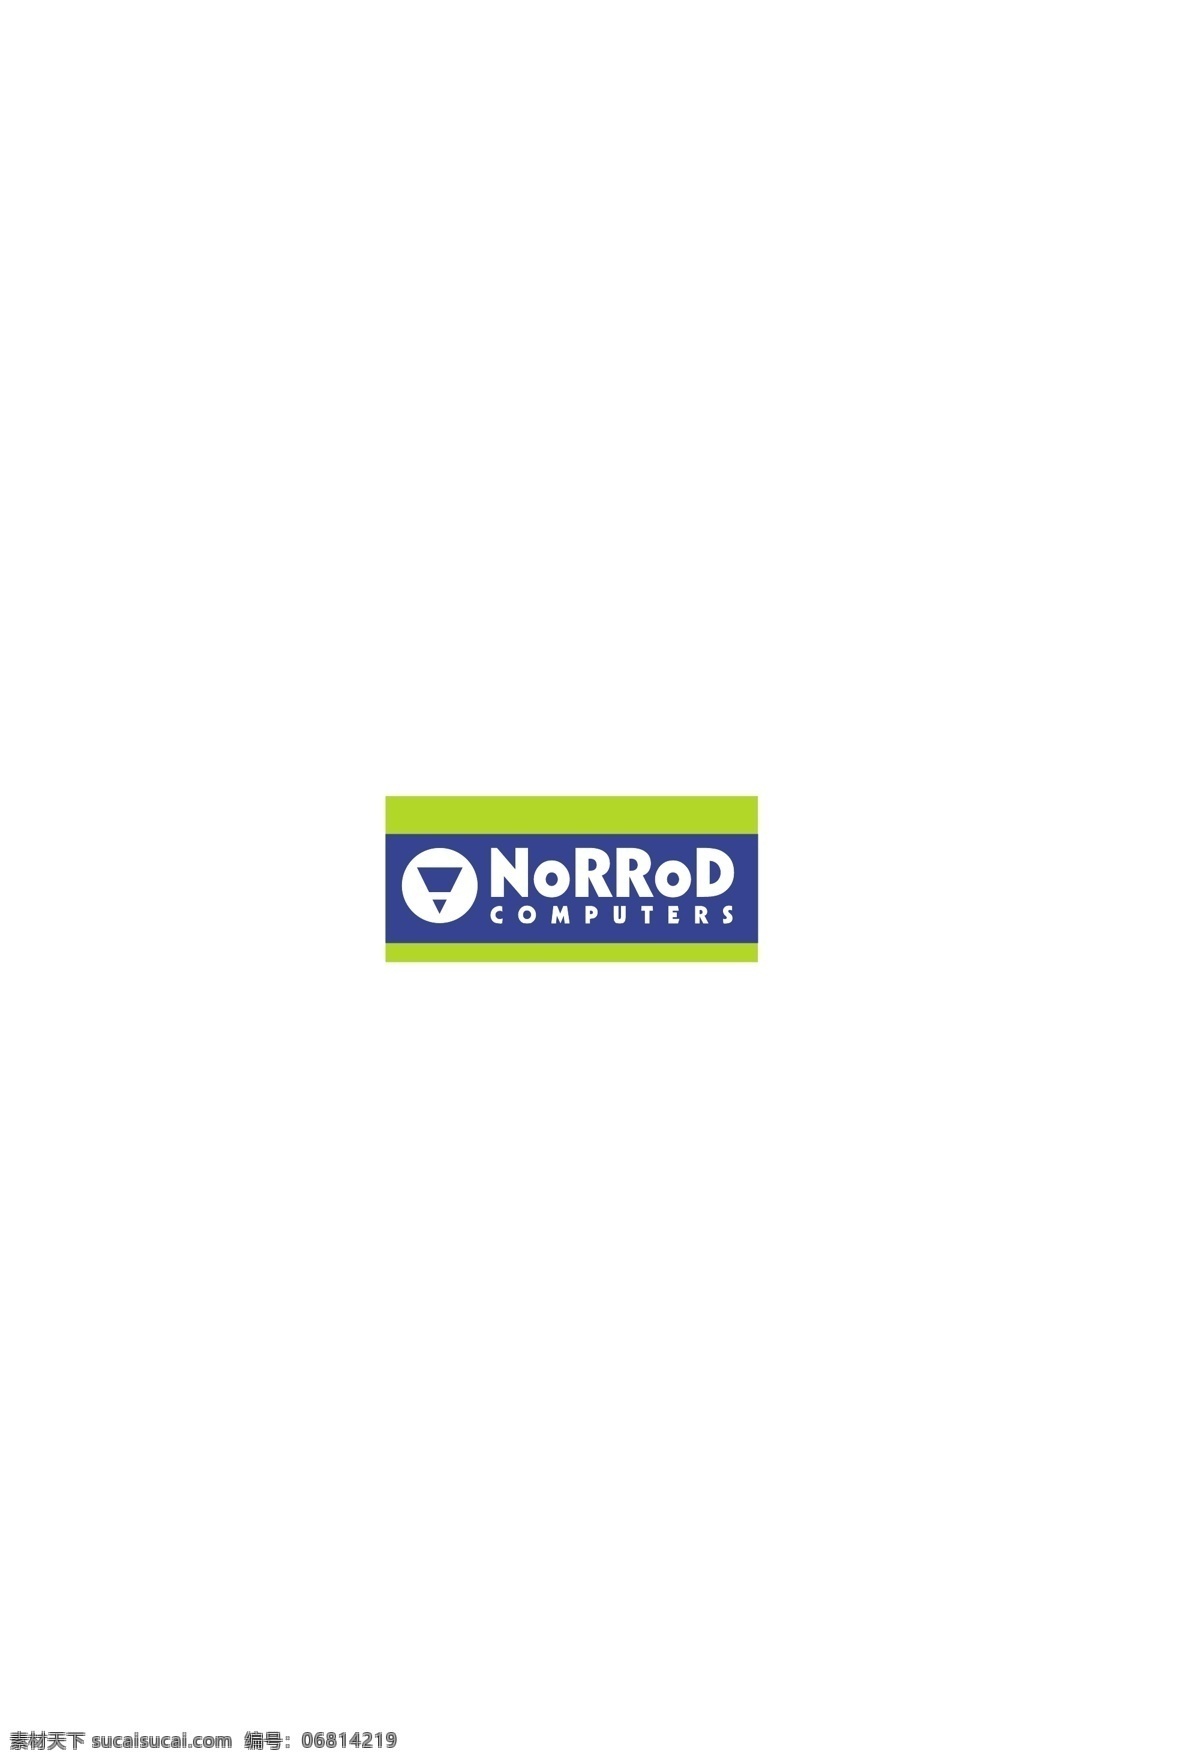 norrod logo大全 logo 设计欣赏 商业矢量 矢量下载 软件公司 标志 标志设计 欣赏 网页矢量 矢量图 其他矢量图